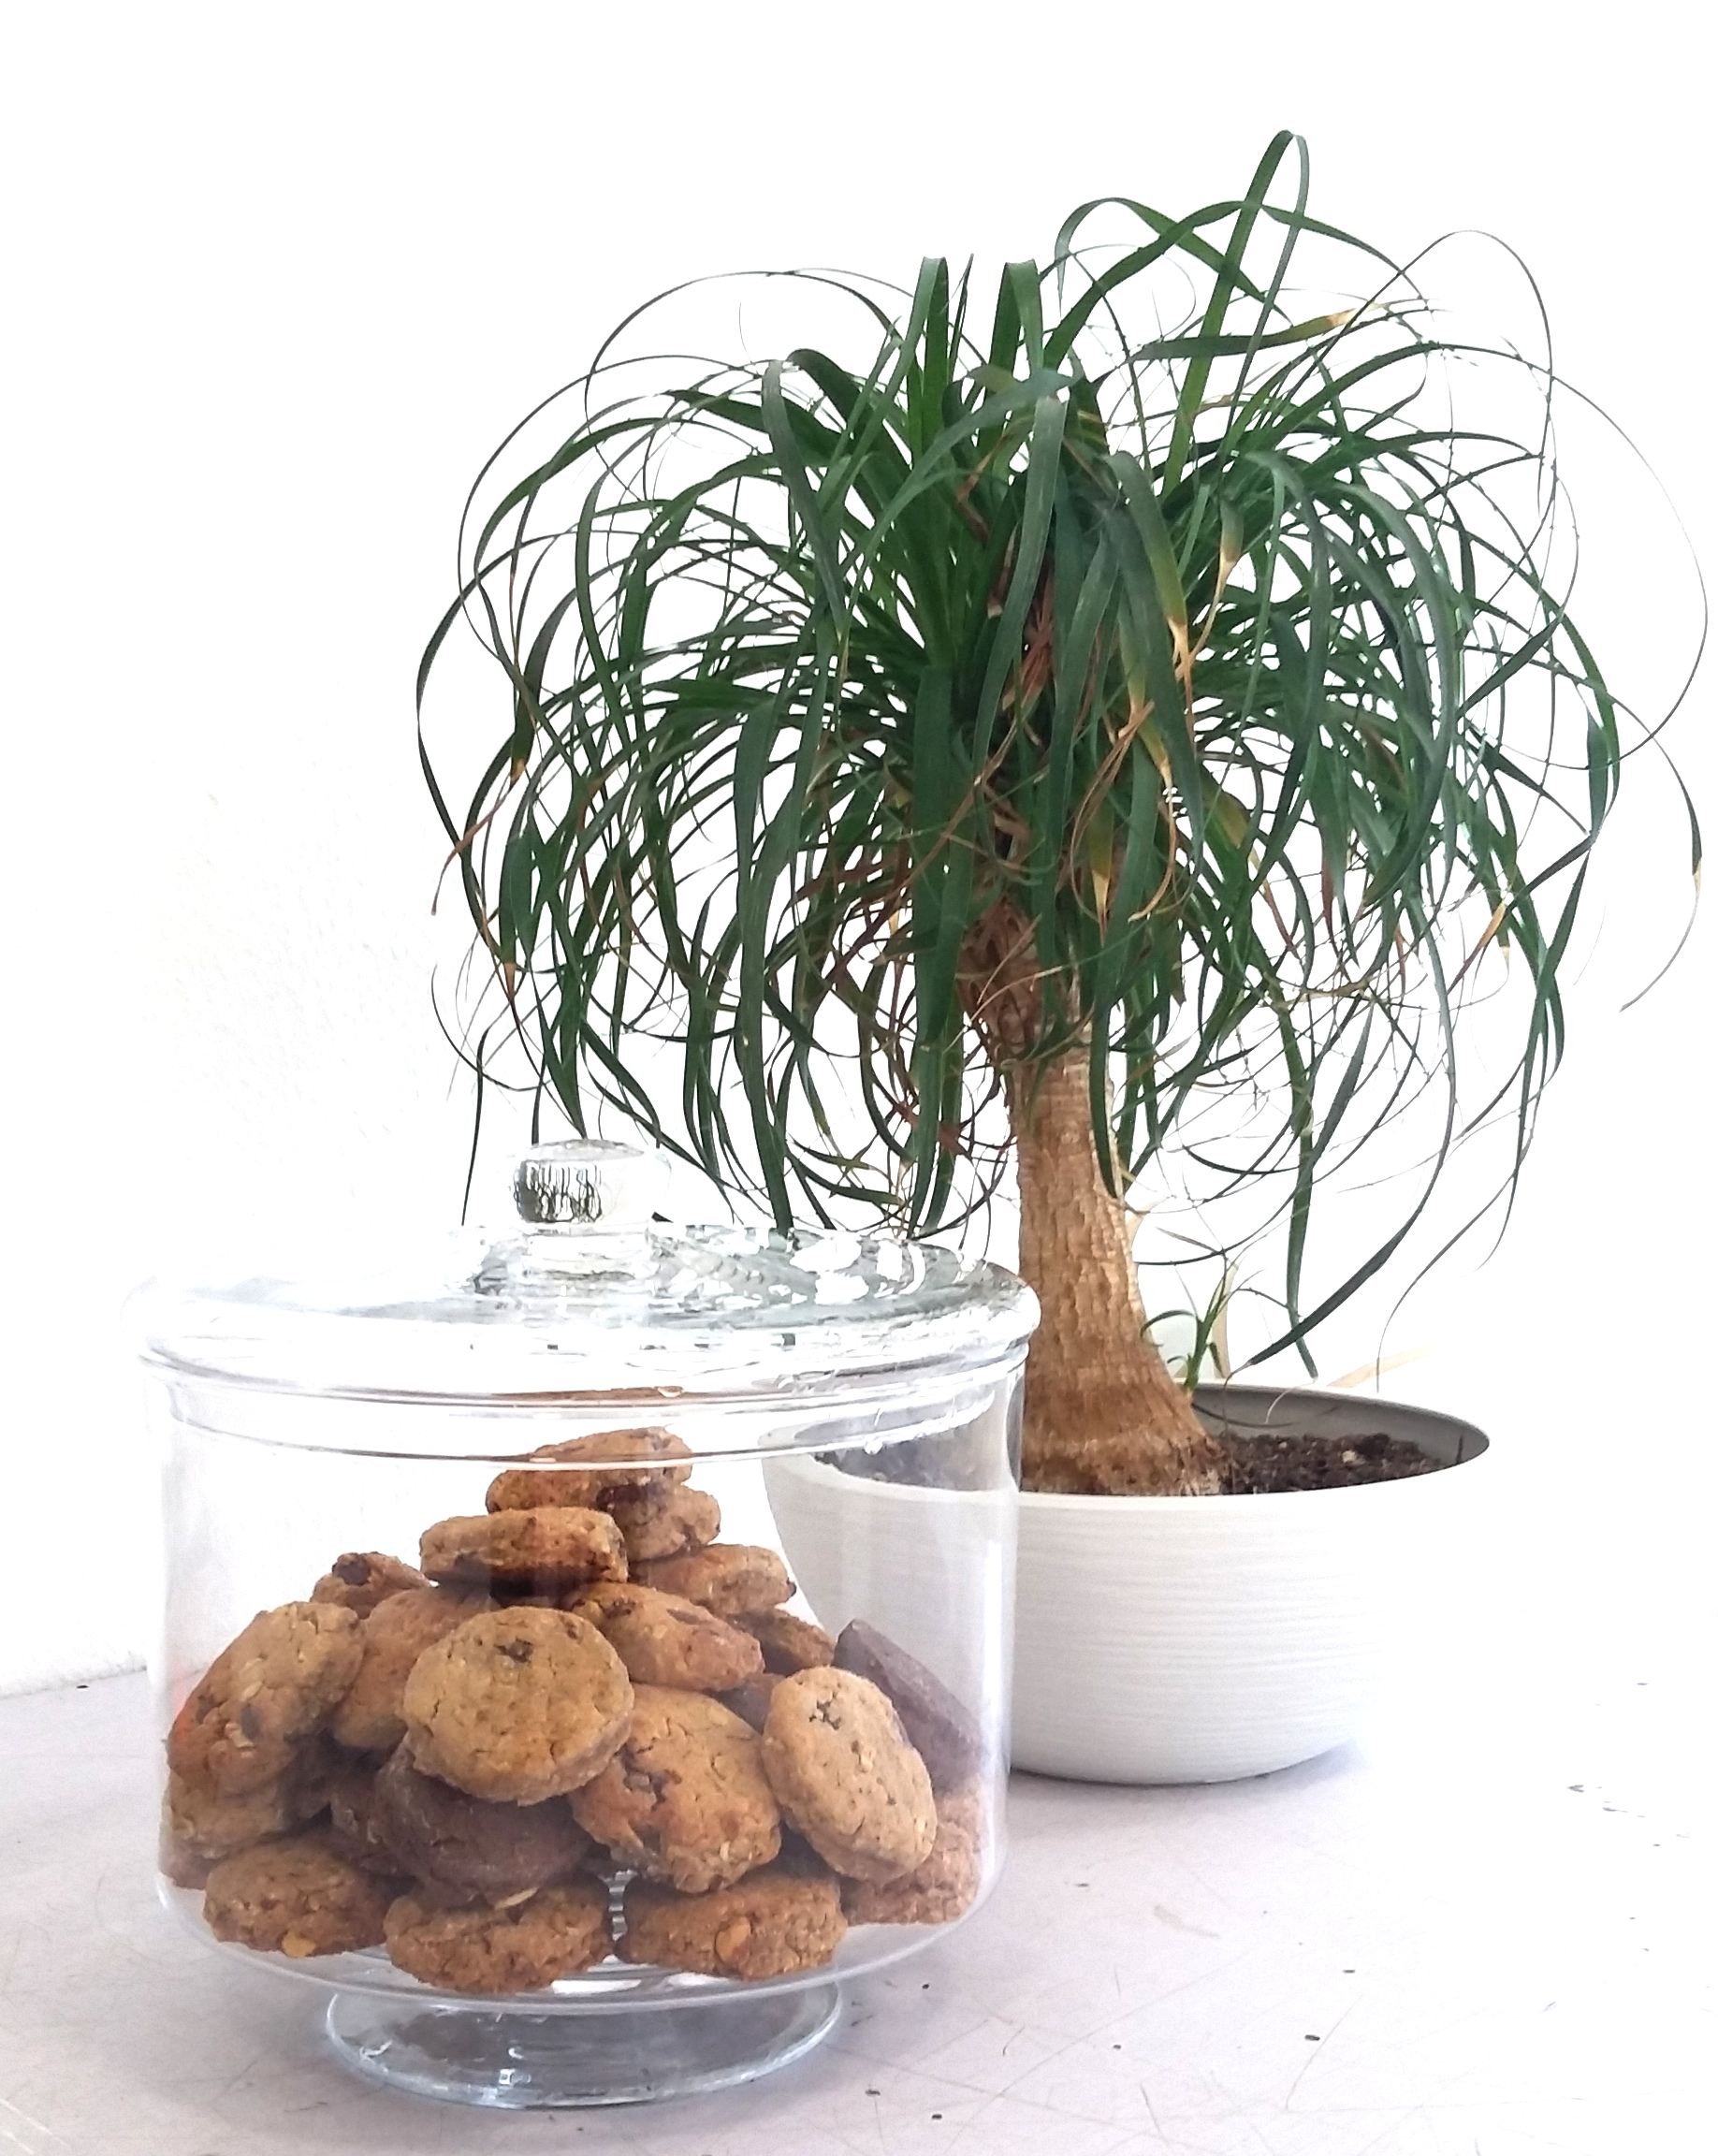 Cookies en bonbonniere en cas sains oclico bio locaux vegan